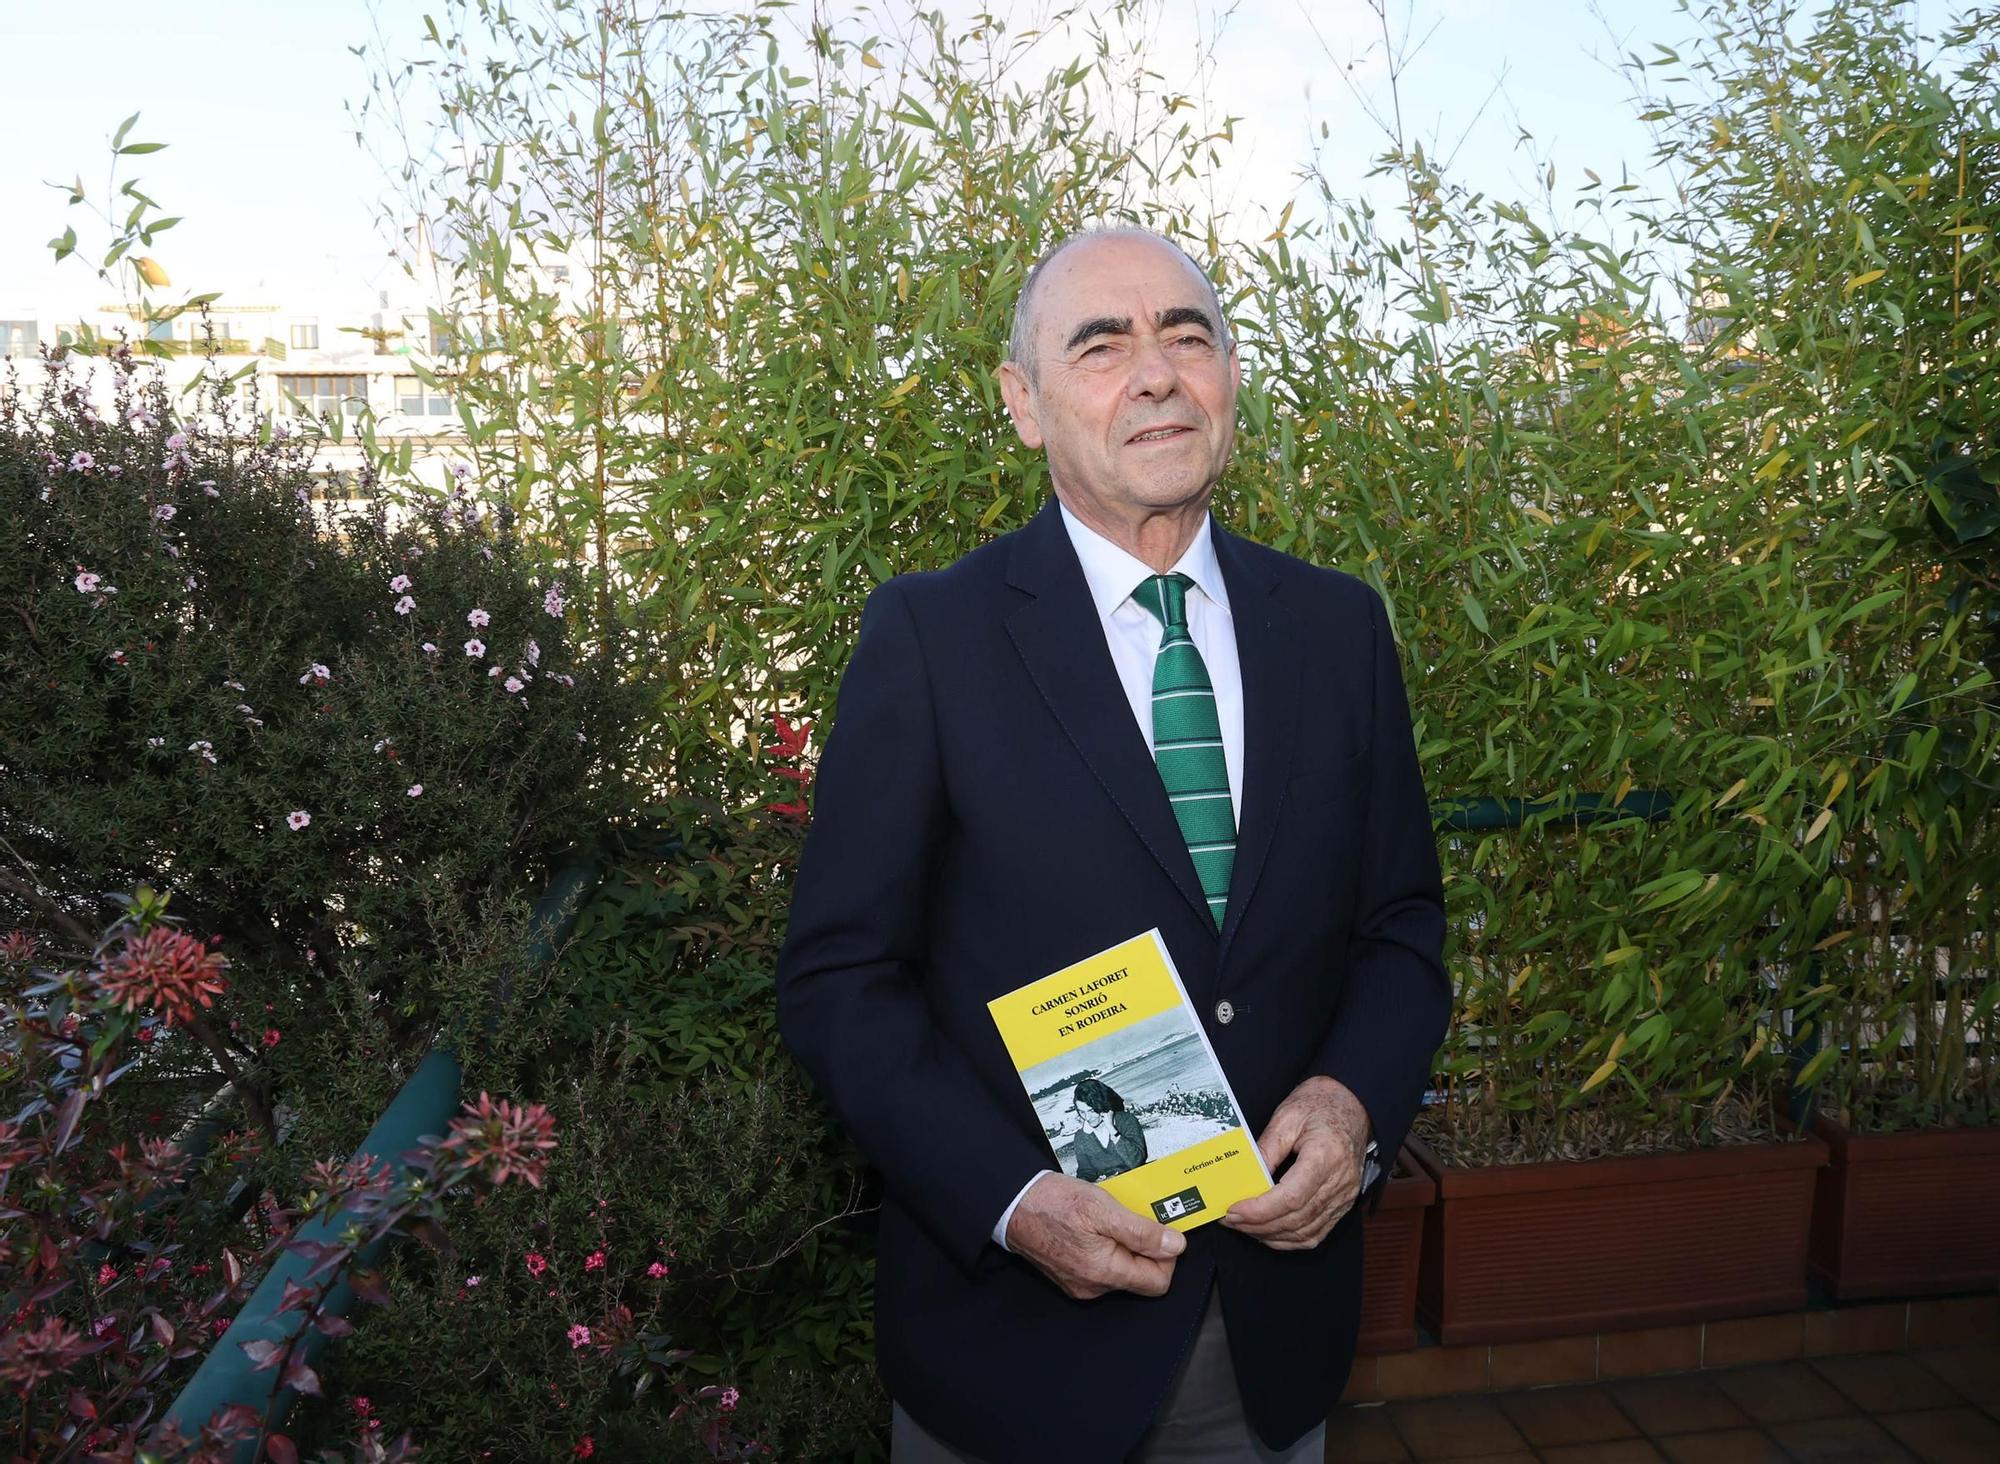 Ceferino de Blas posa con su nuevo libro Carmen Laforet sonrío en Rodeira Alba Villar 2021.jpg